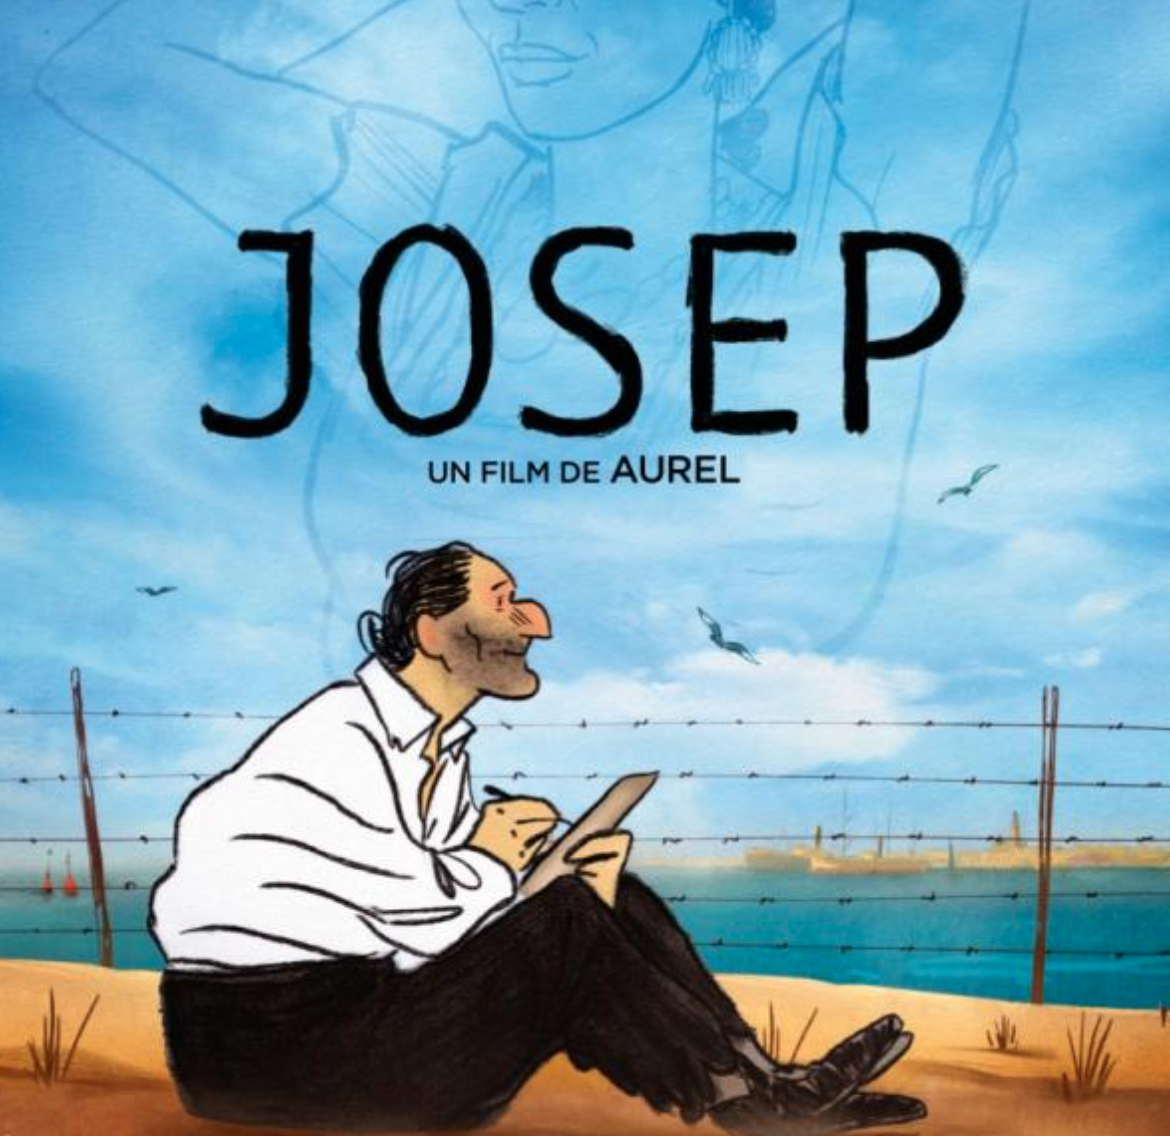 CINECLUB: Josep